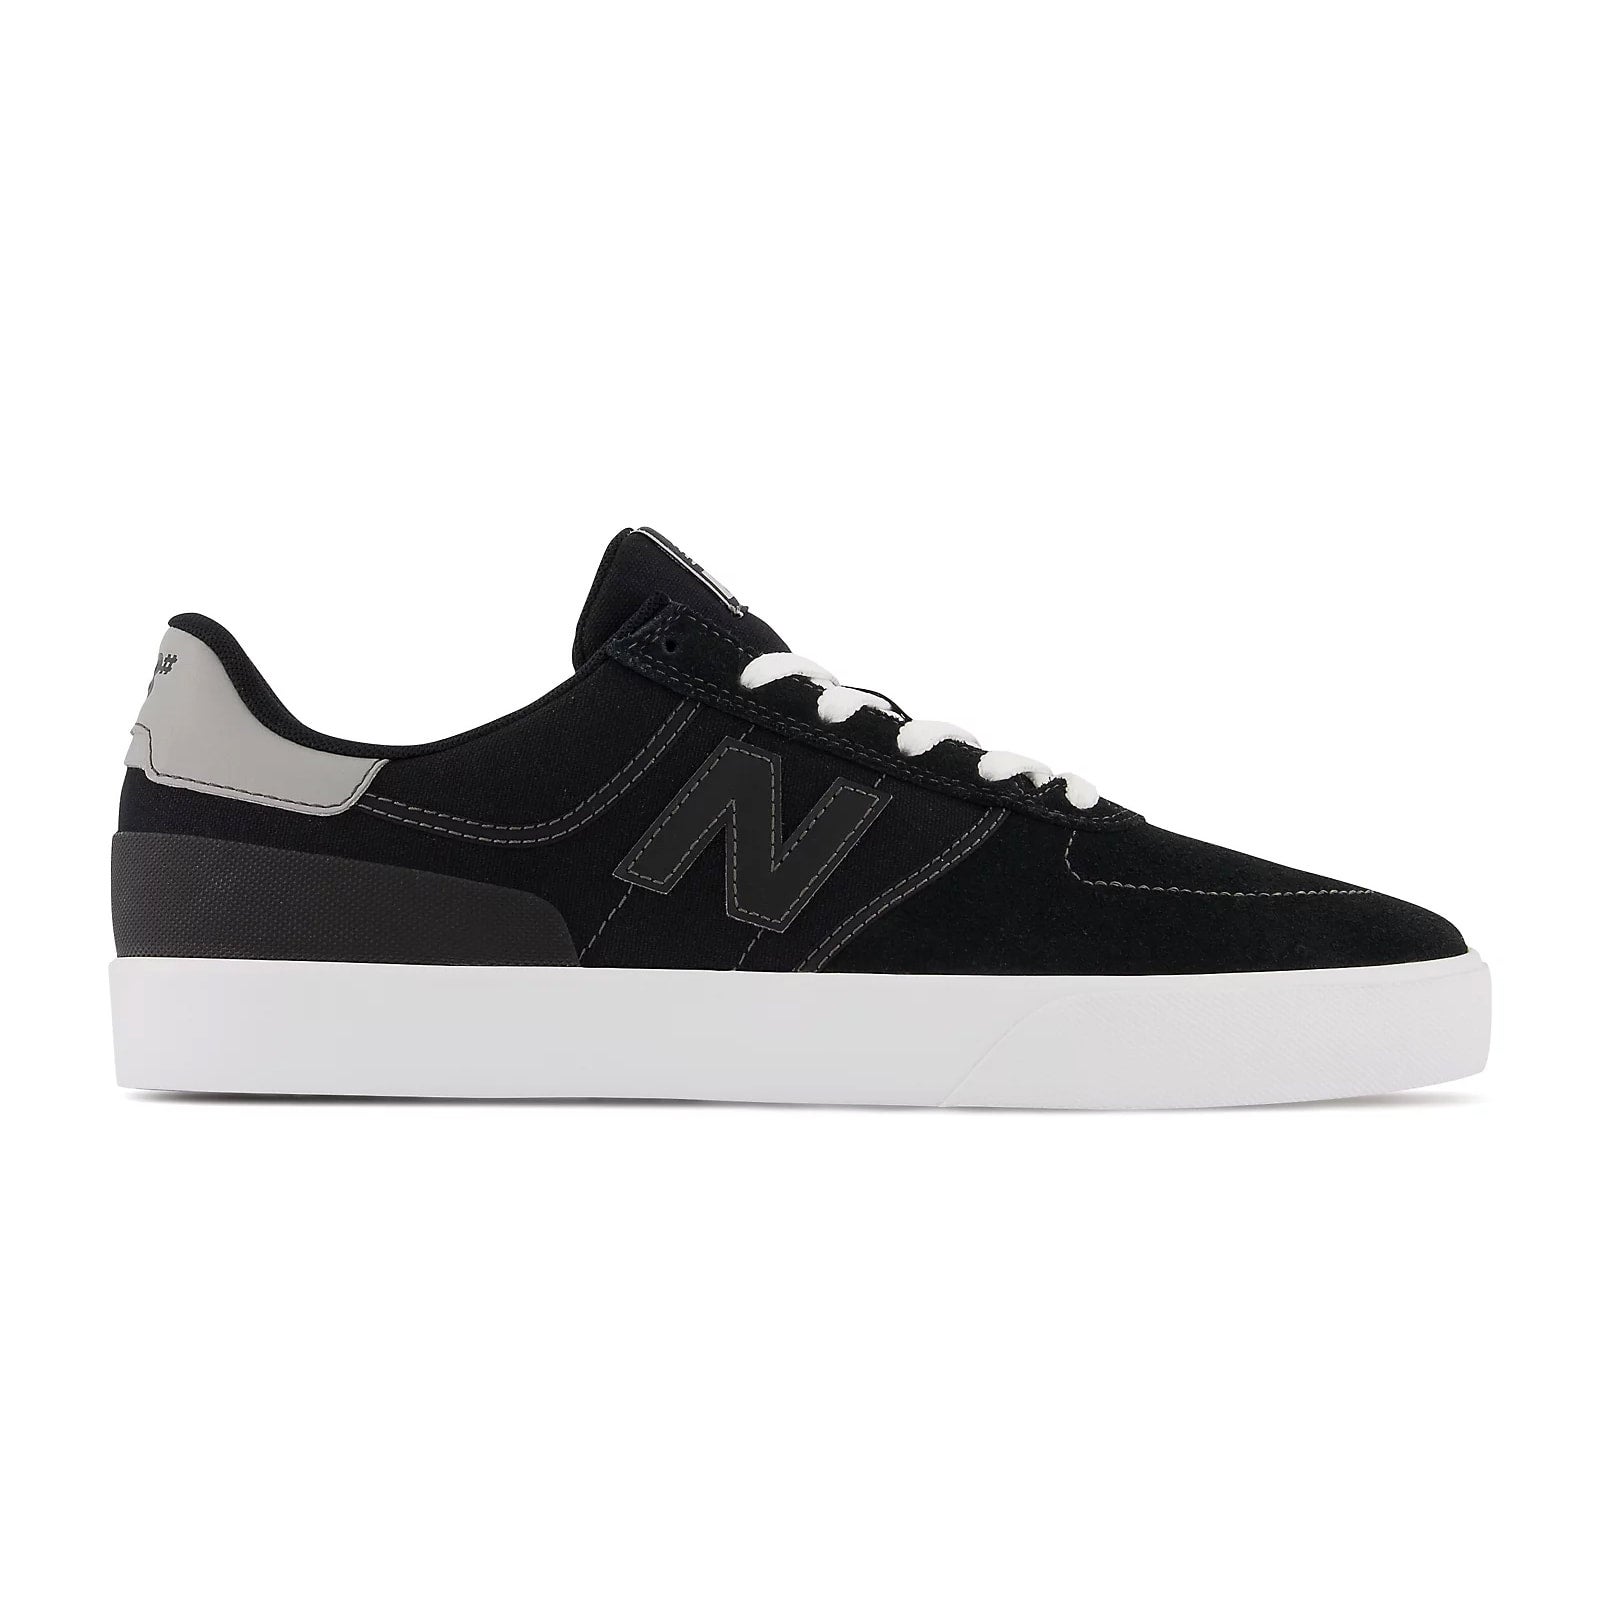 NB NUMERIC 272 (BLACK/GREY) | Skateshop